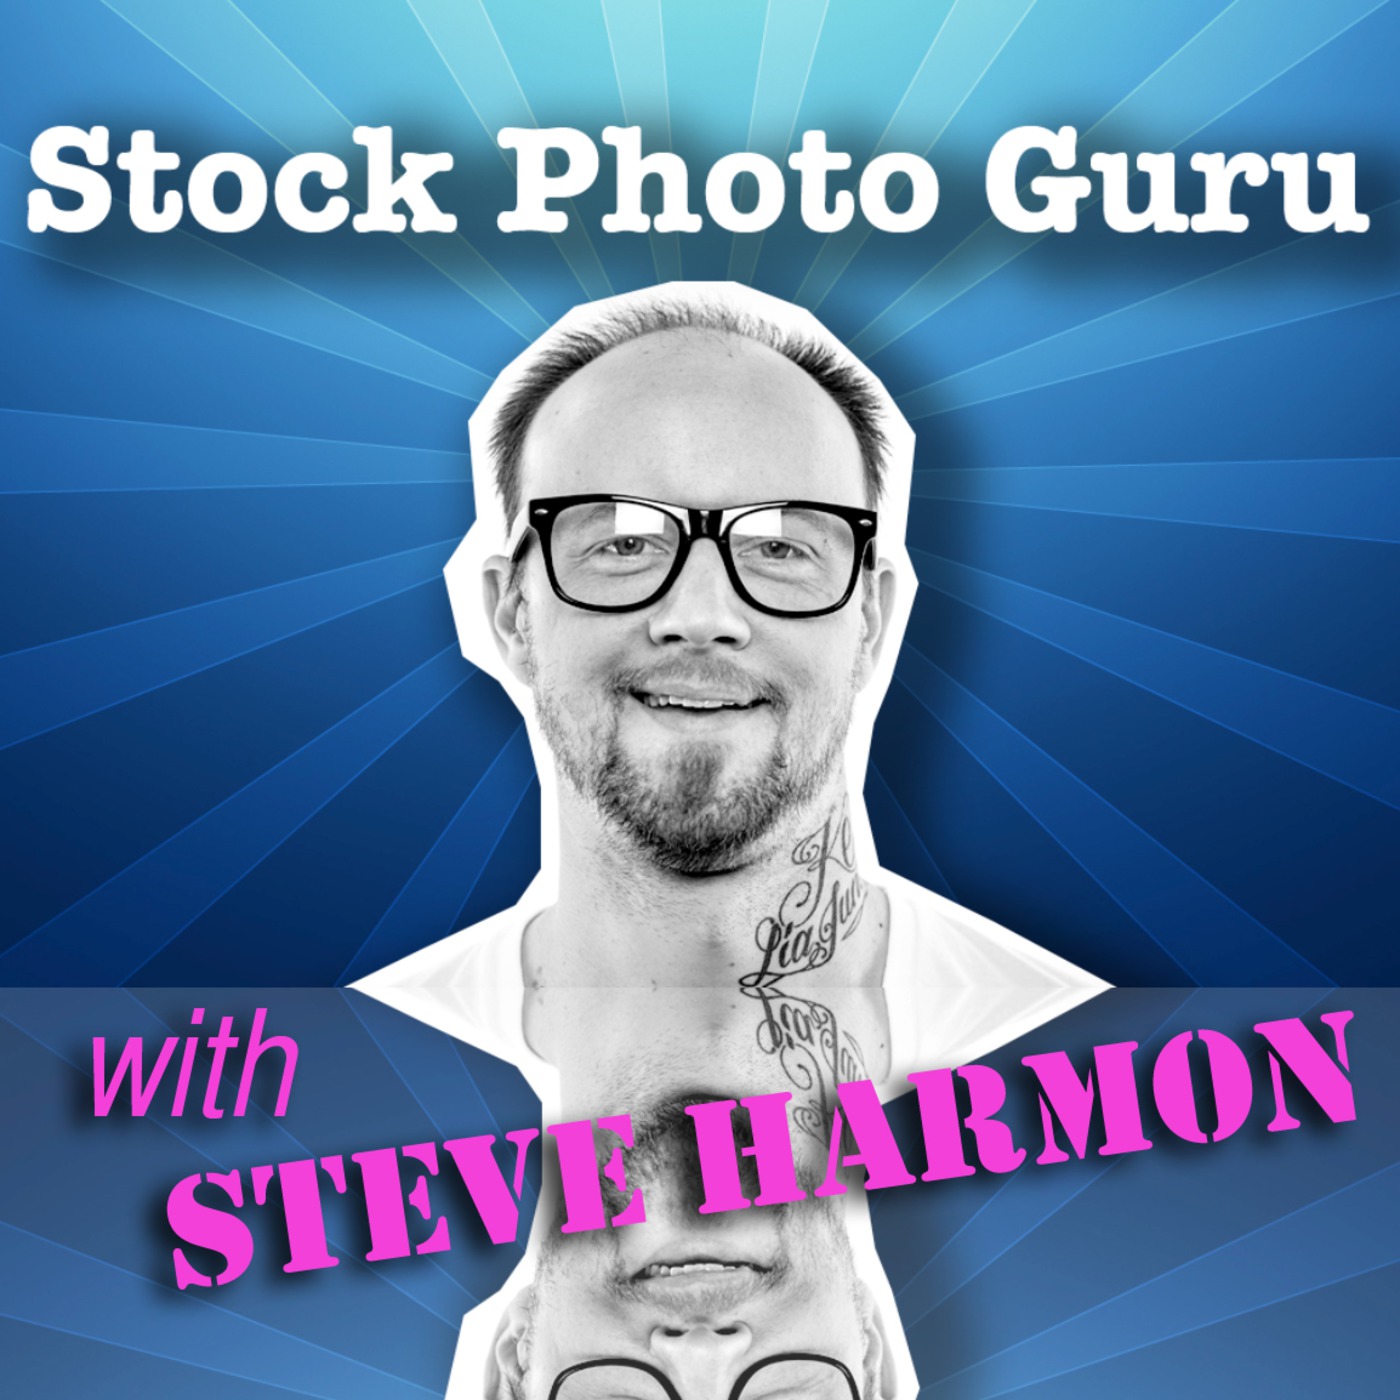 Stock Photo Guru - Stock Photography Blog